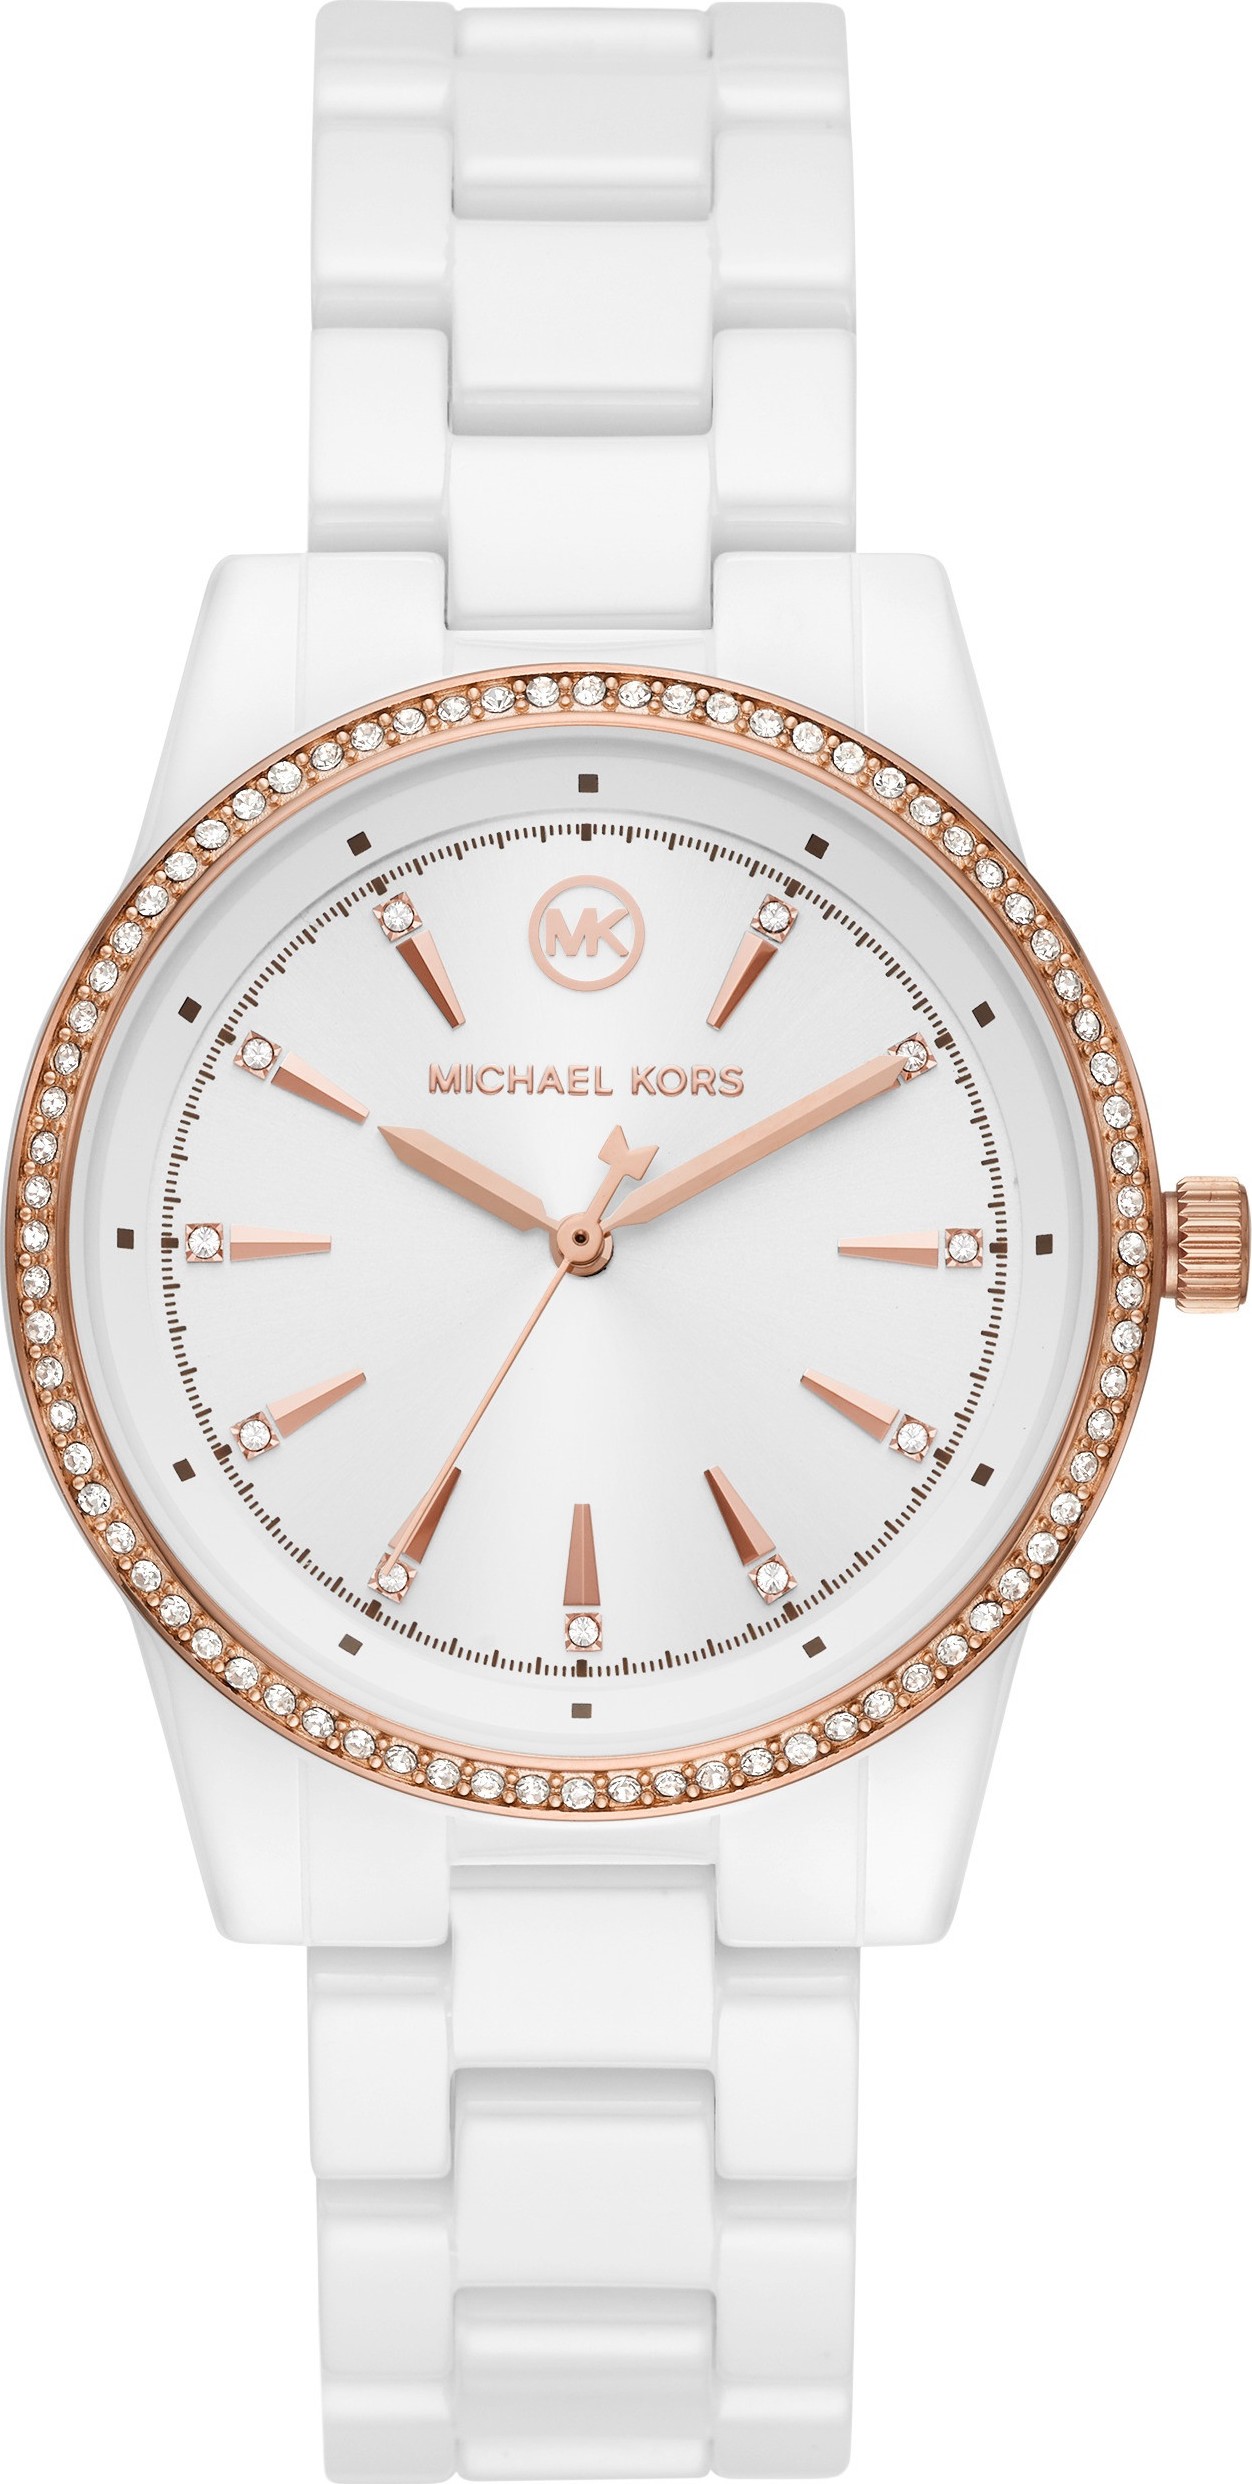 Michael Kors MK6837 Ritz White Ceramic Watch 37mm